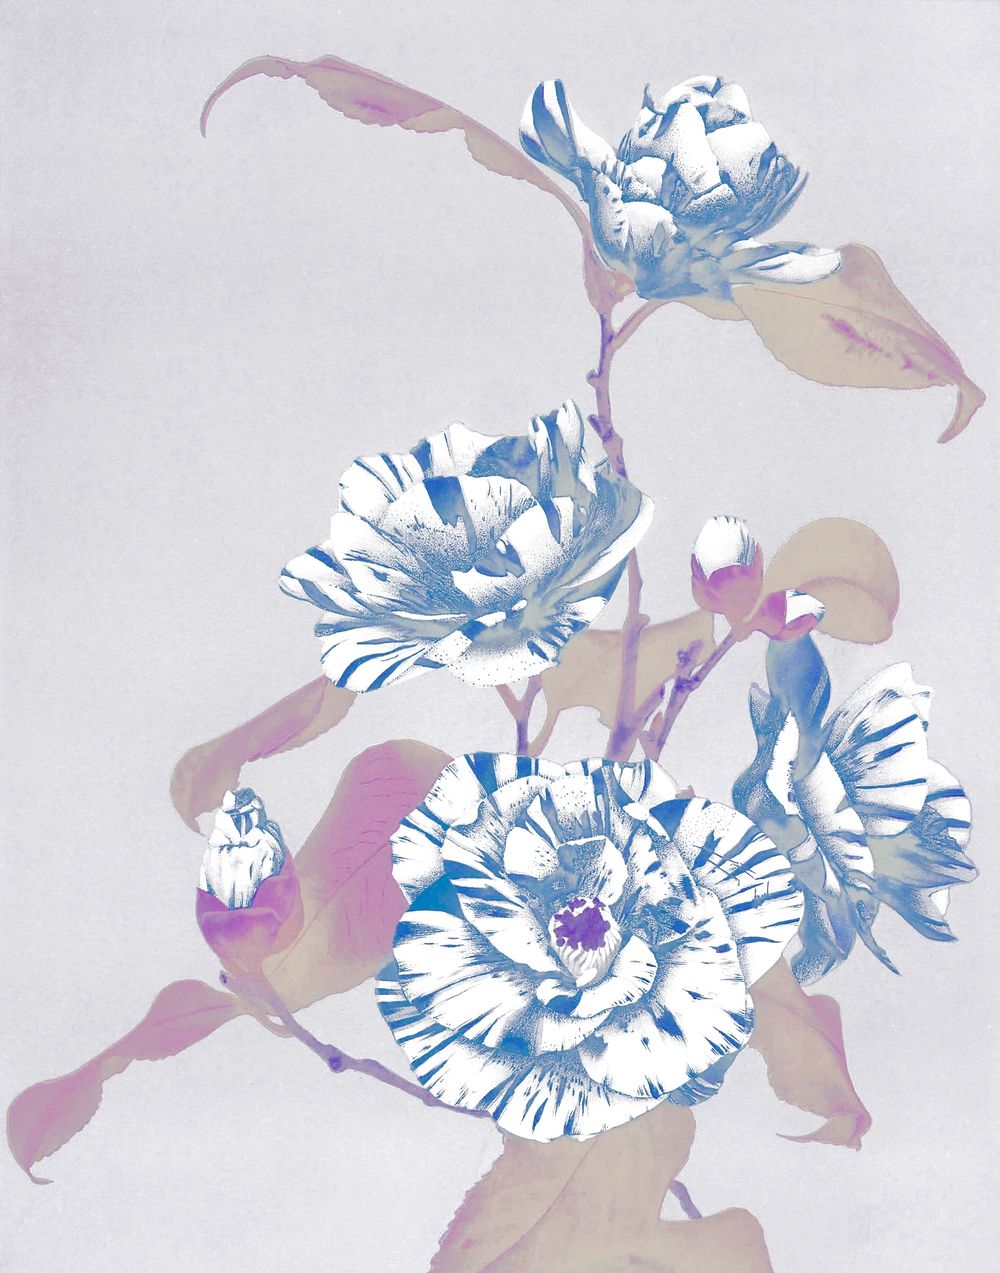 Striped Camellias negative effect vintage illustration artwork, remix from orginal photography.